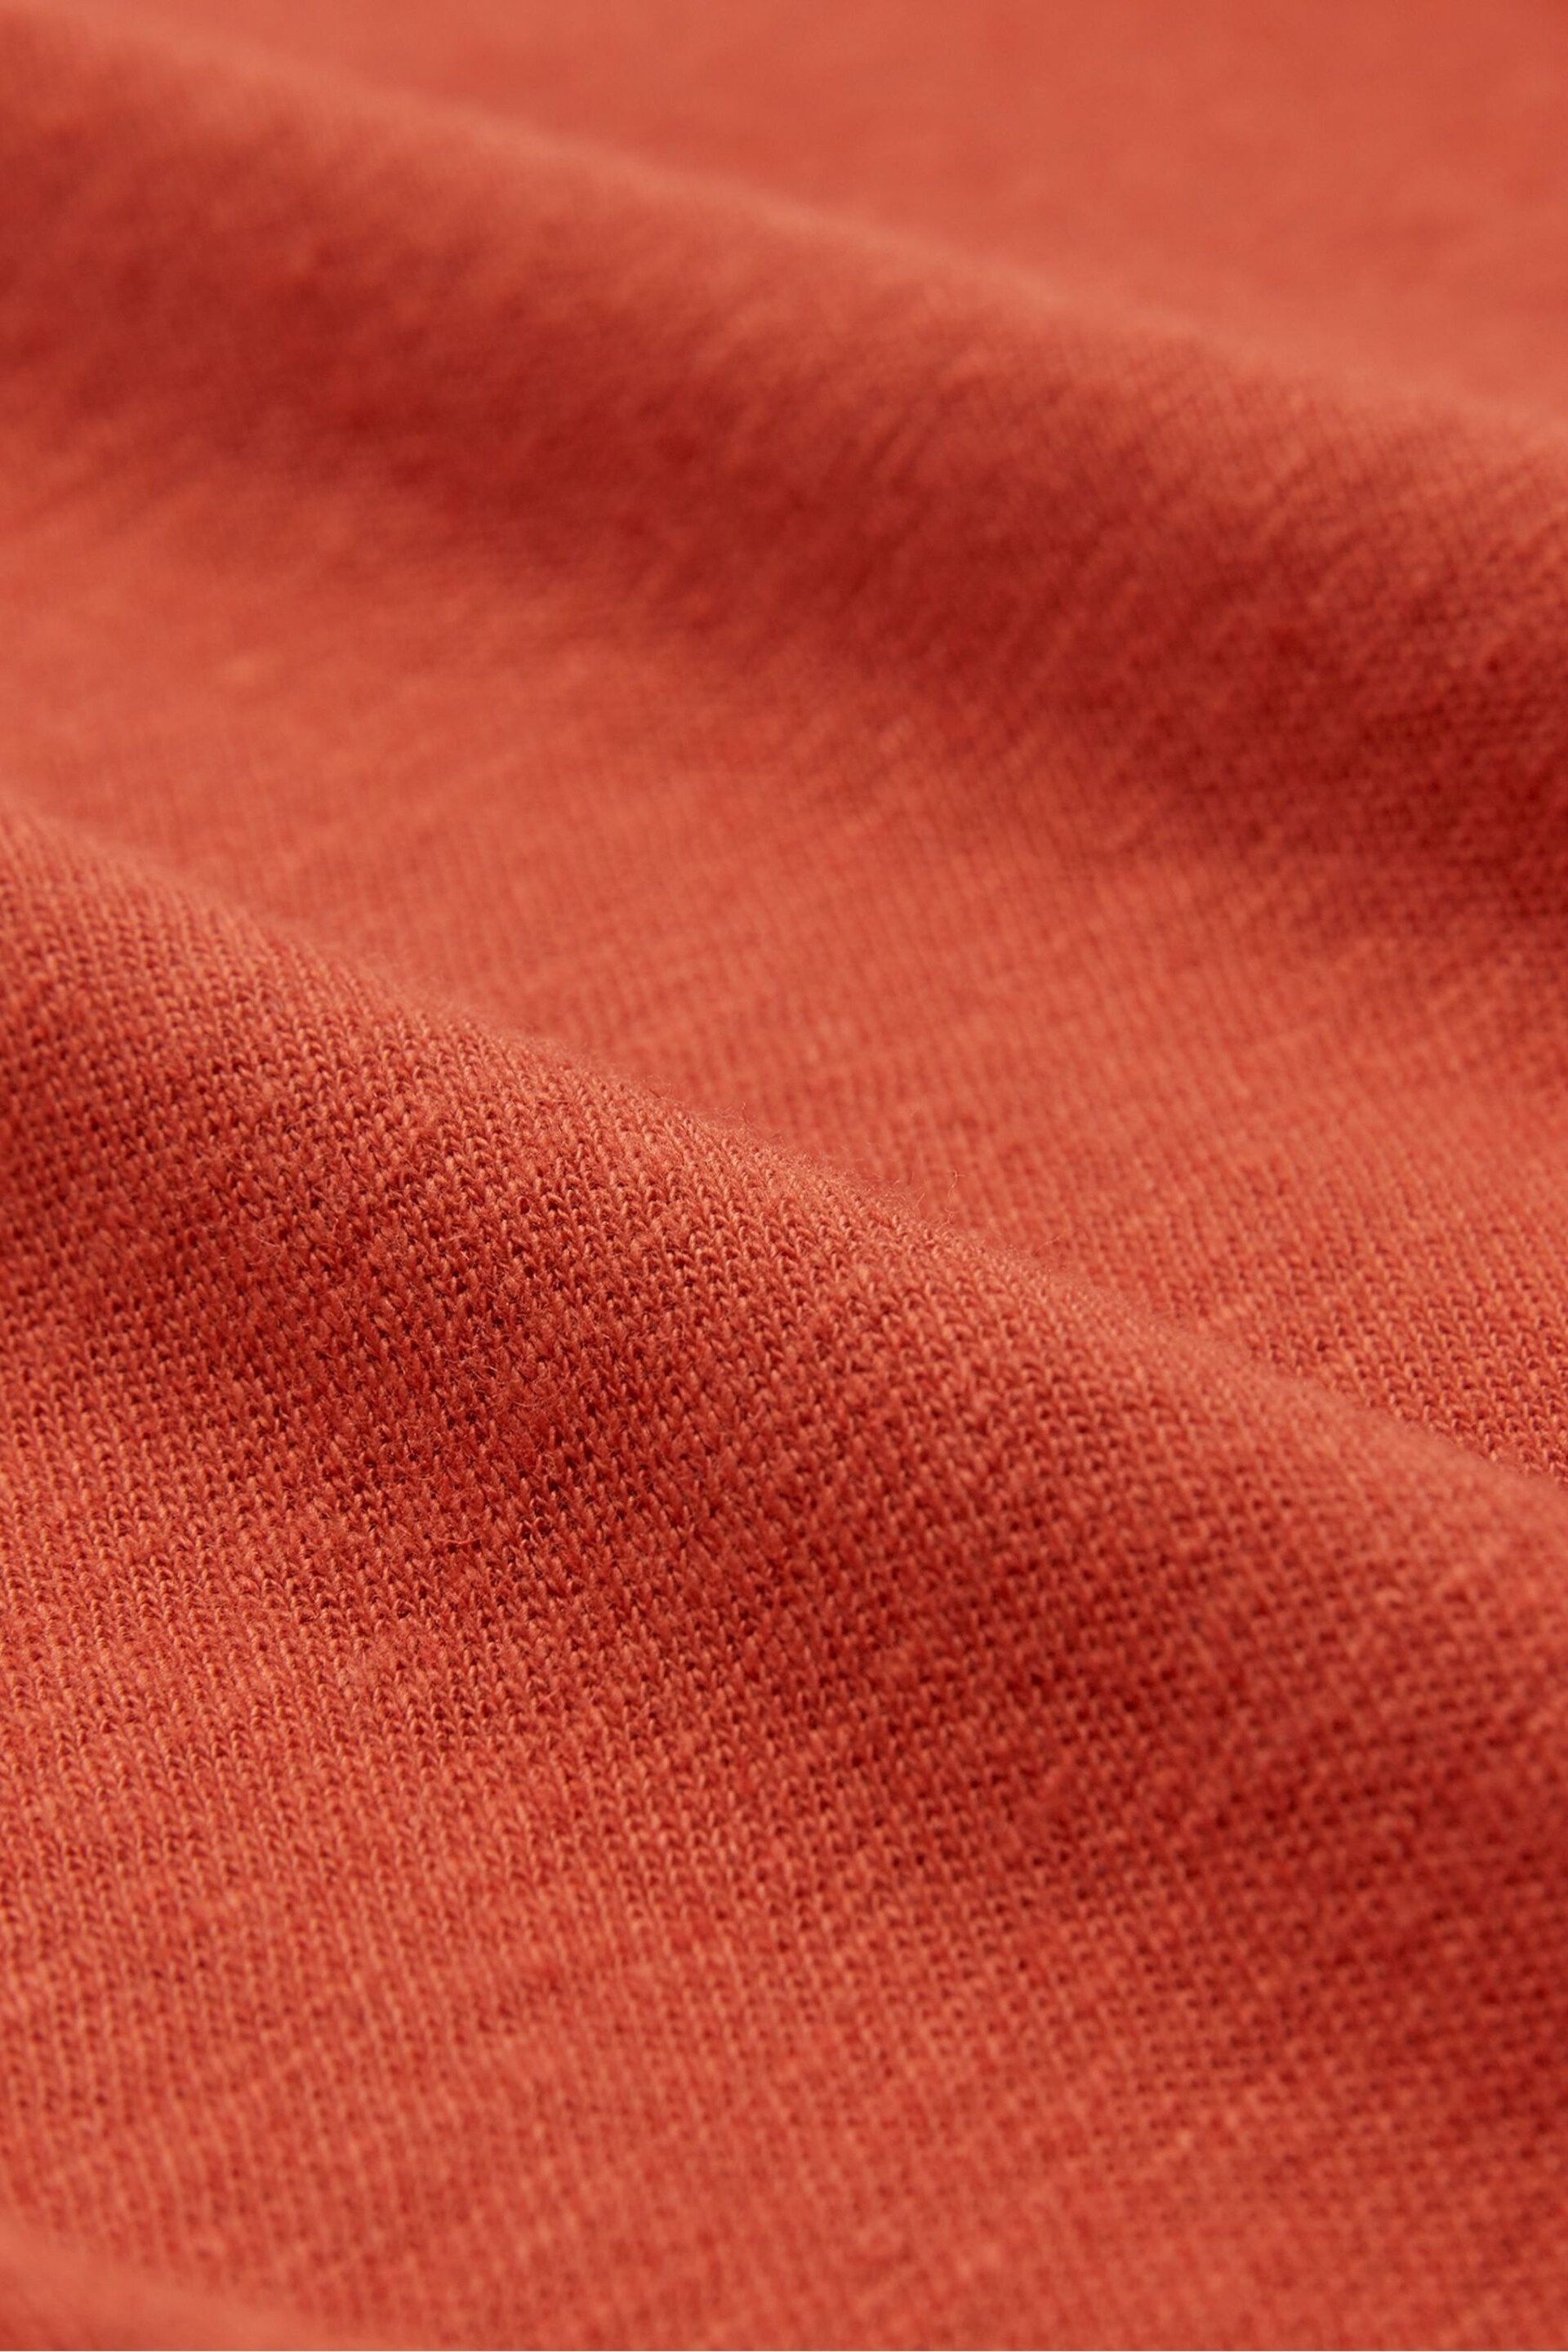 Celtic & Co. Orange Linen Cotton V-Neck Midi Dress - Image 3 of 4